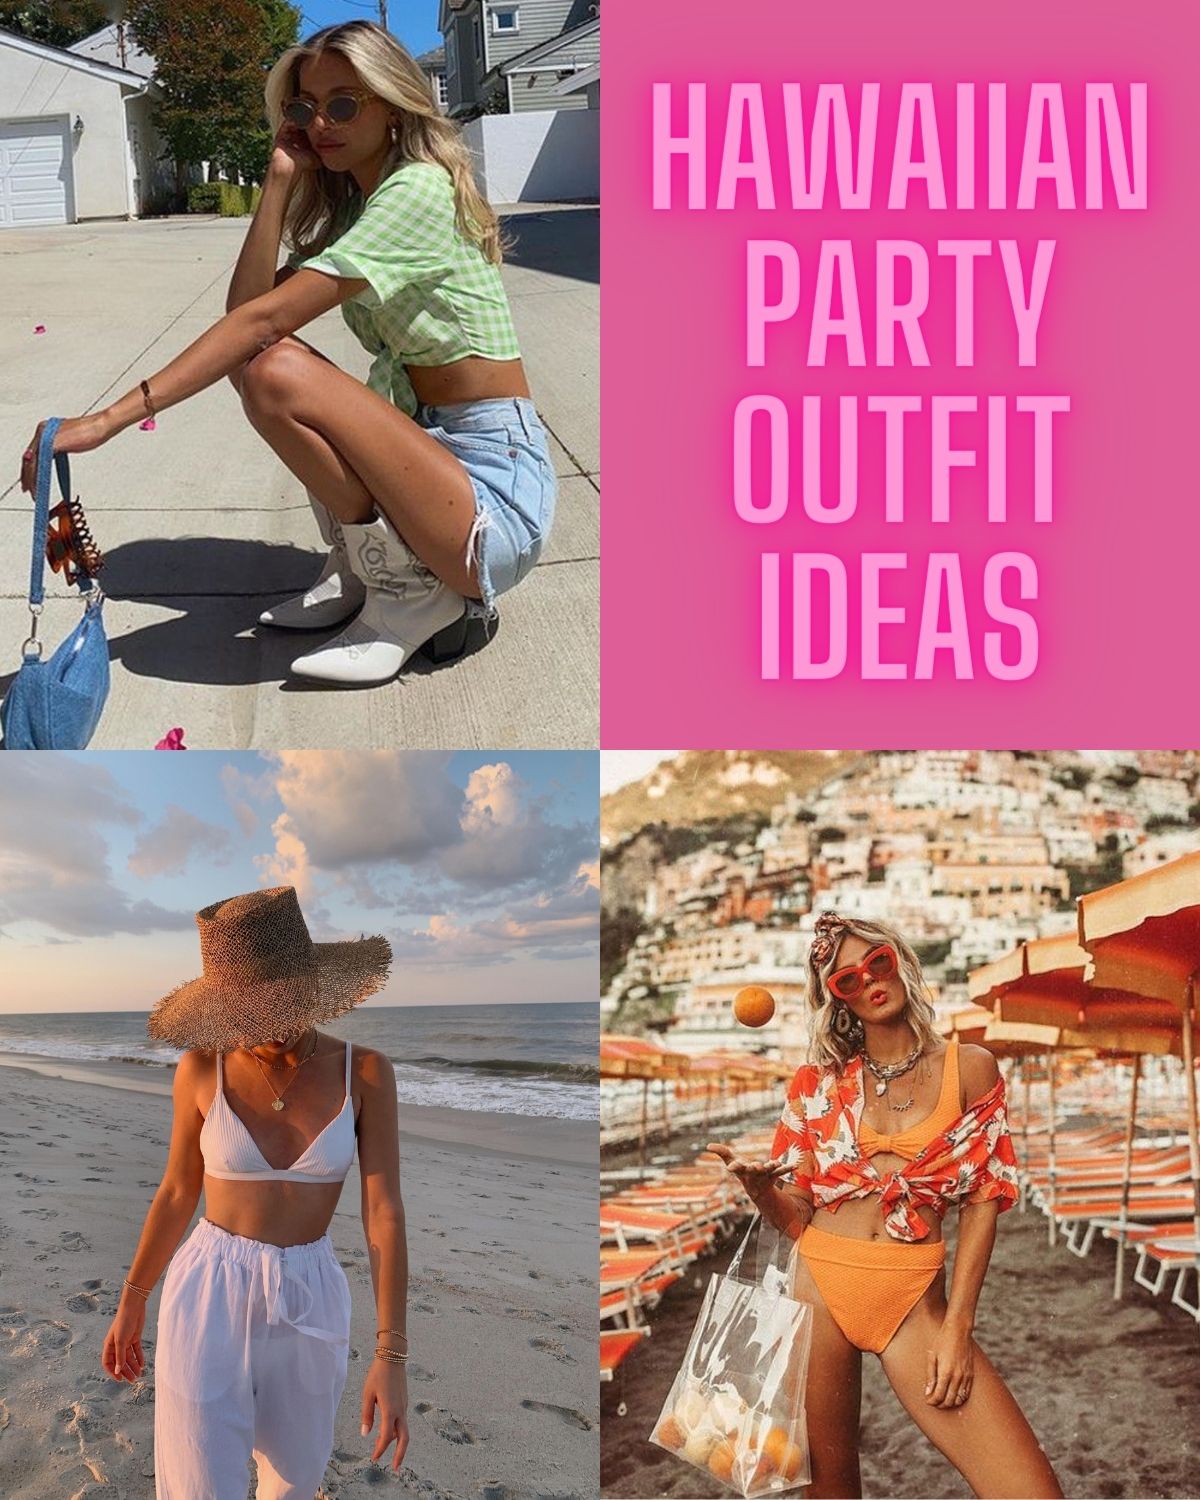 Three girls in beach Hawaiian outfit ideas